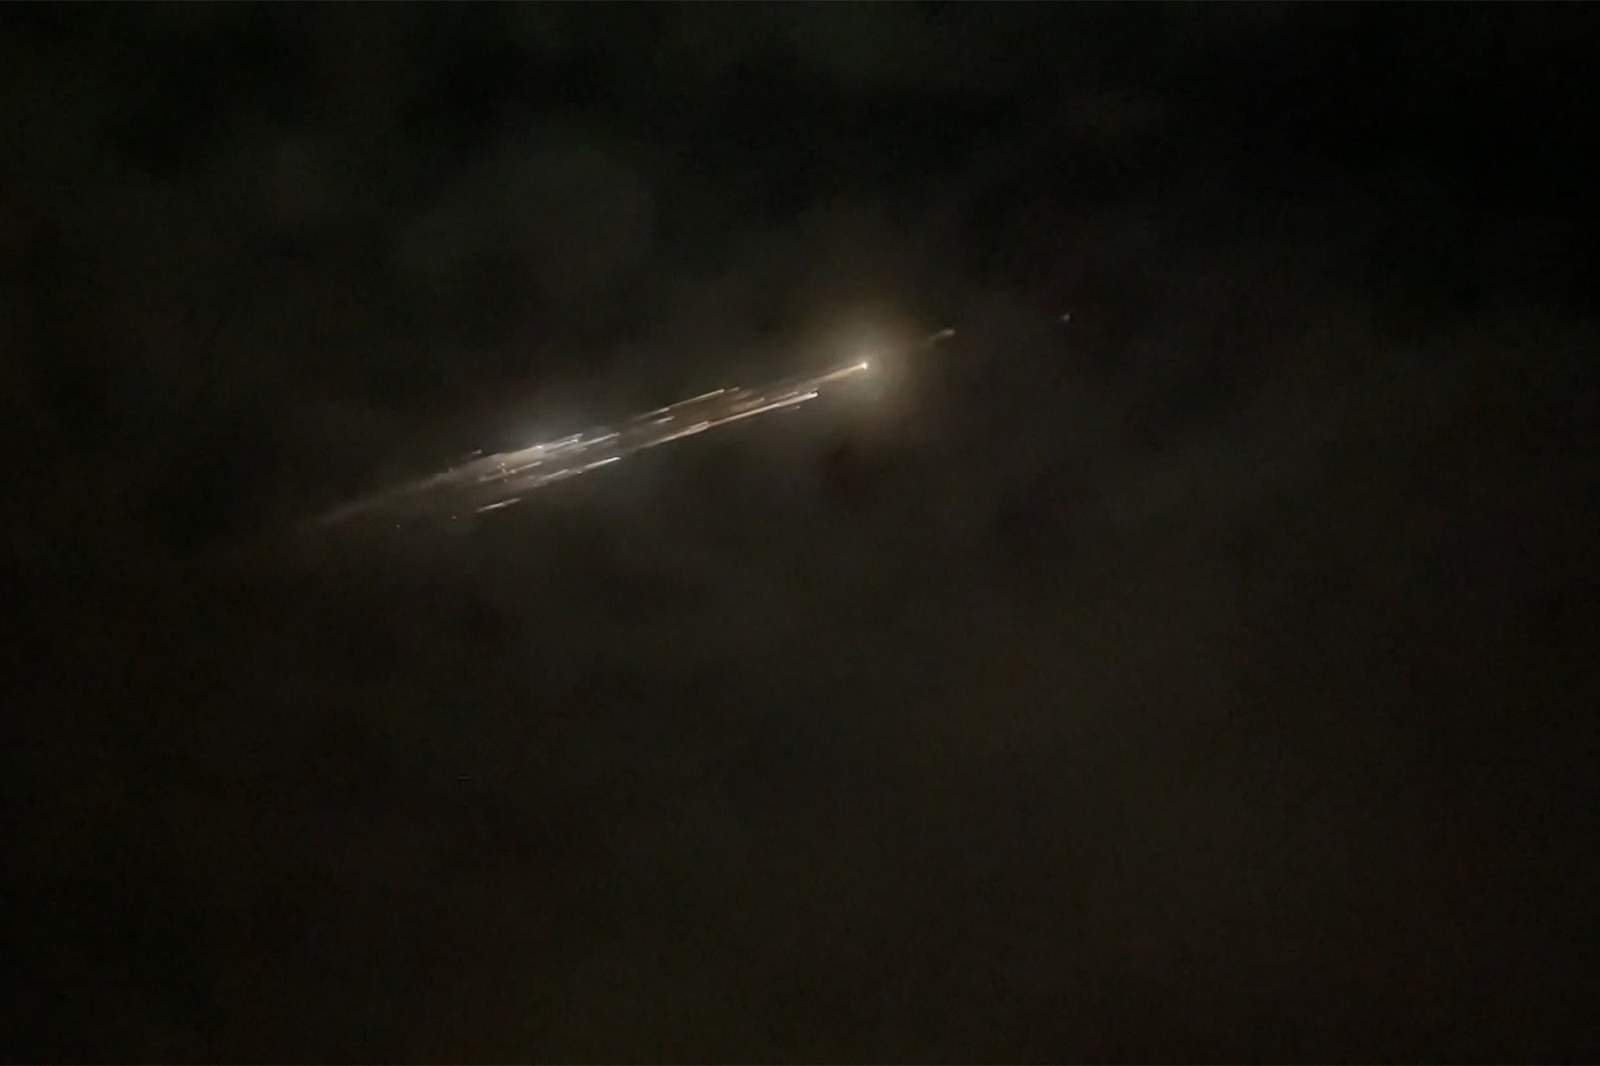 Piece of SpaceX rocket debris lands at Washington state farm